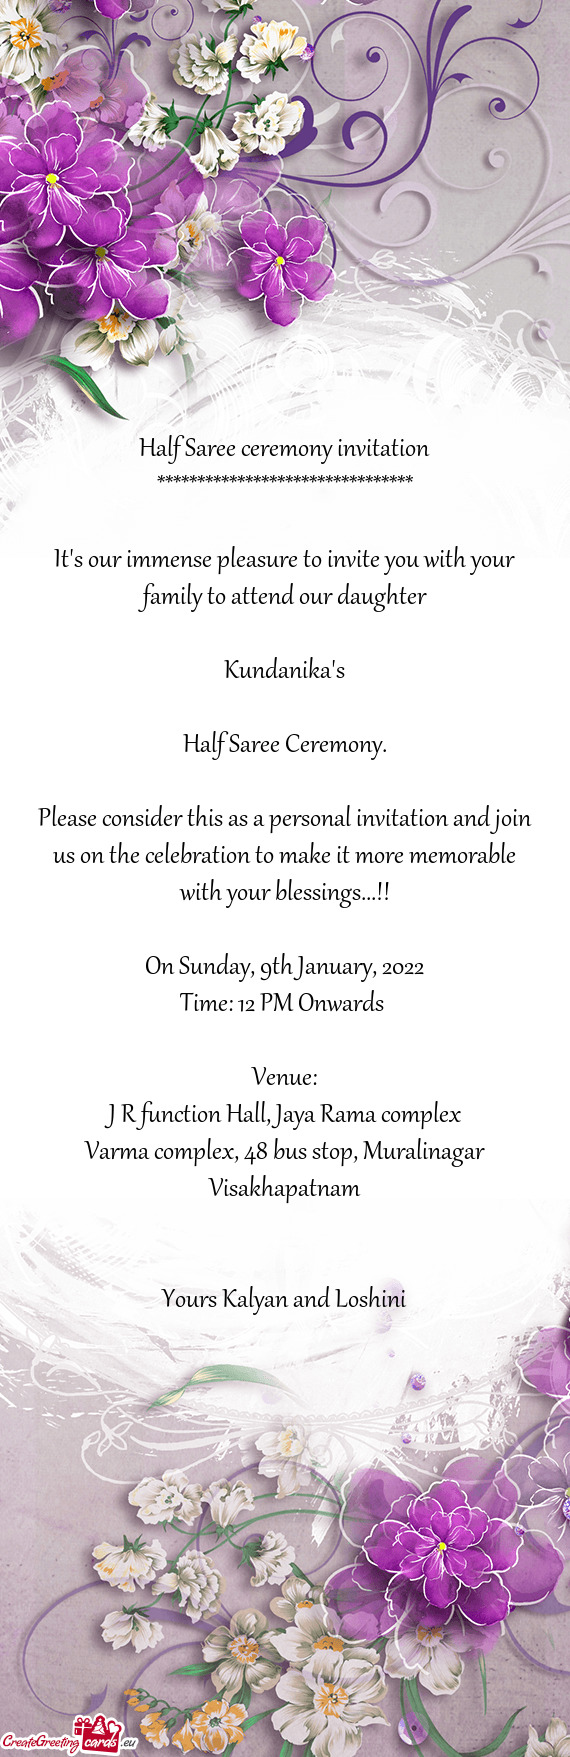 J R function Hall, Jaya Rama complex